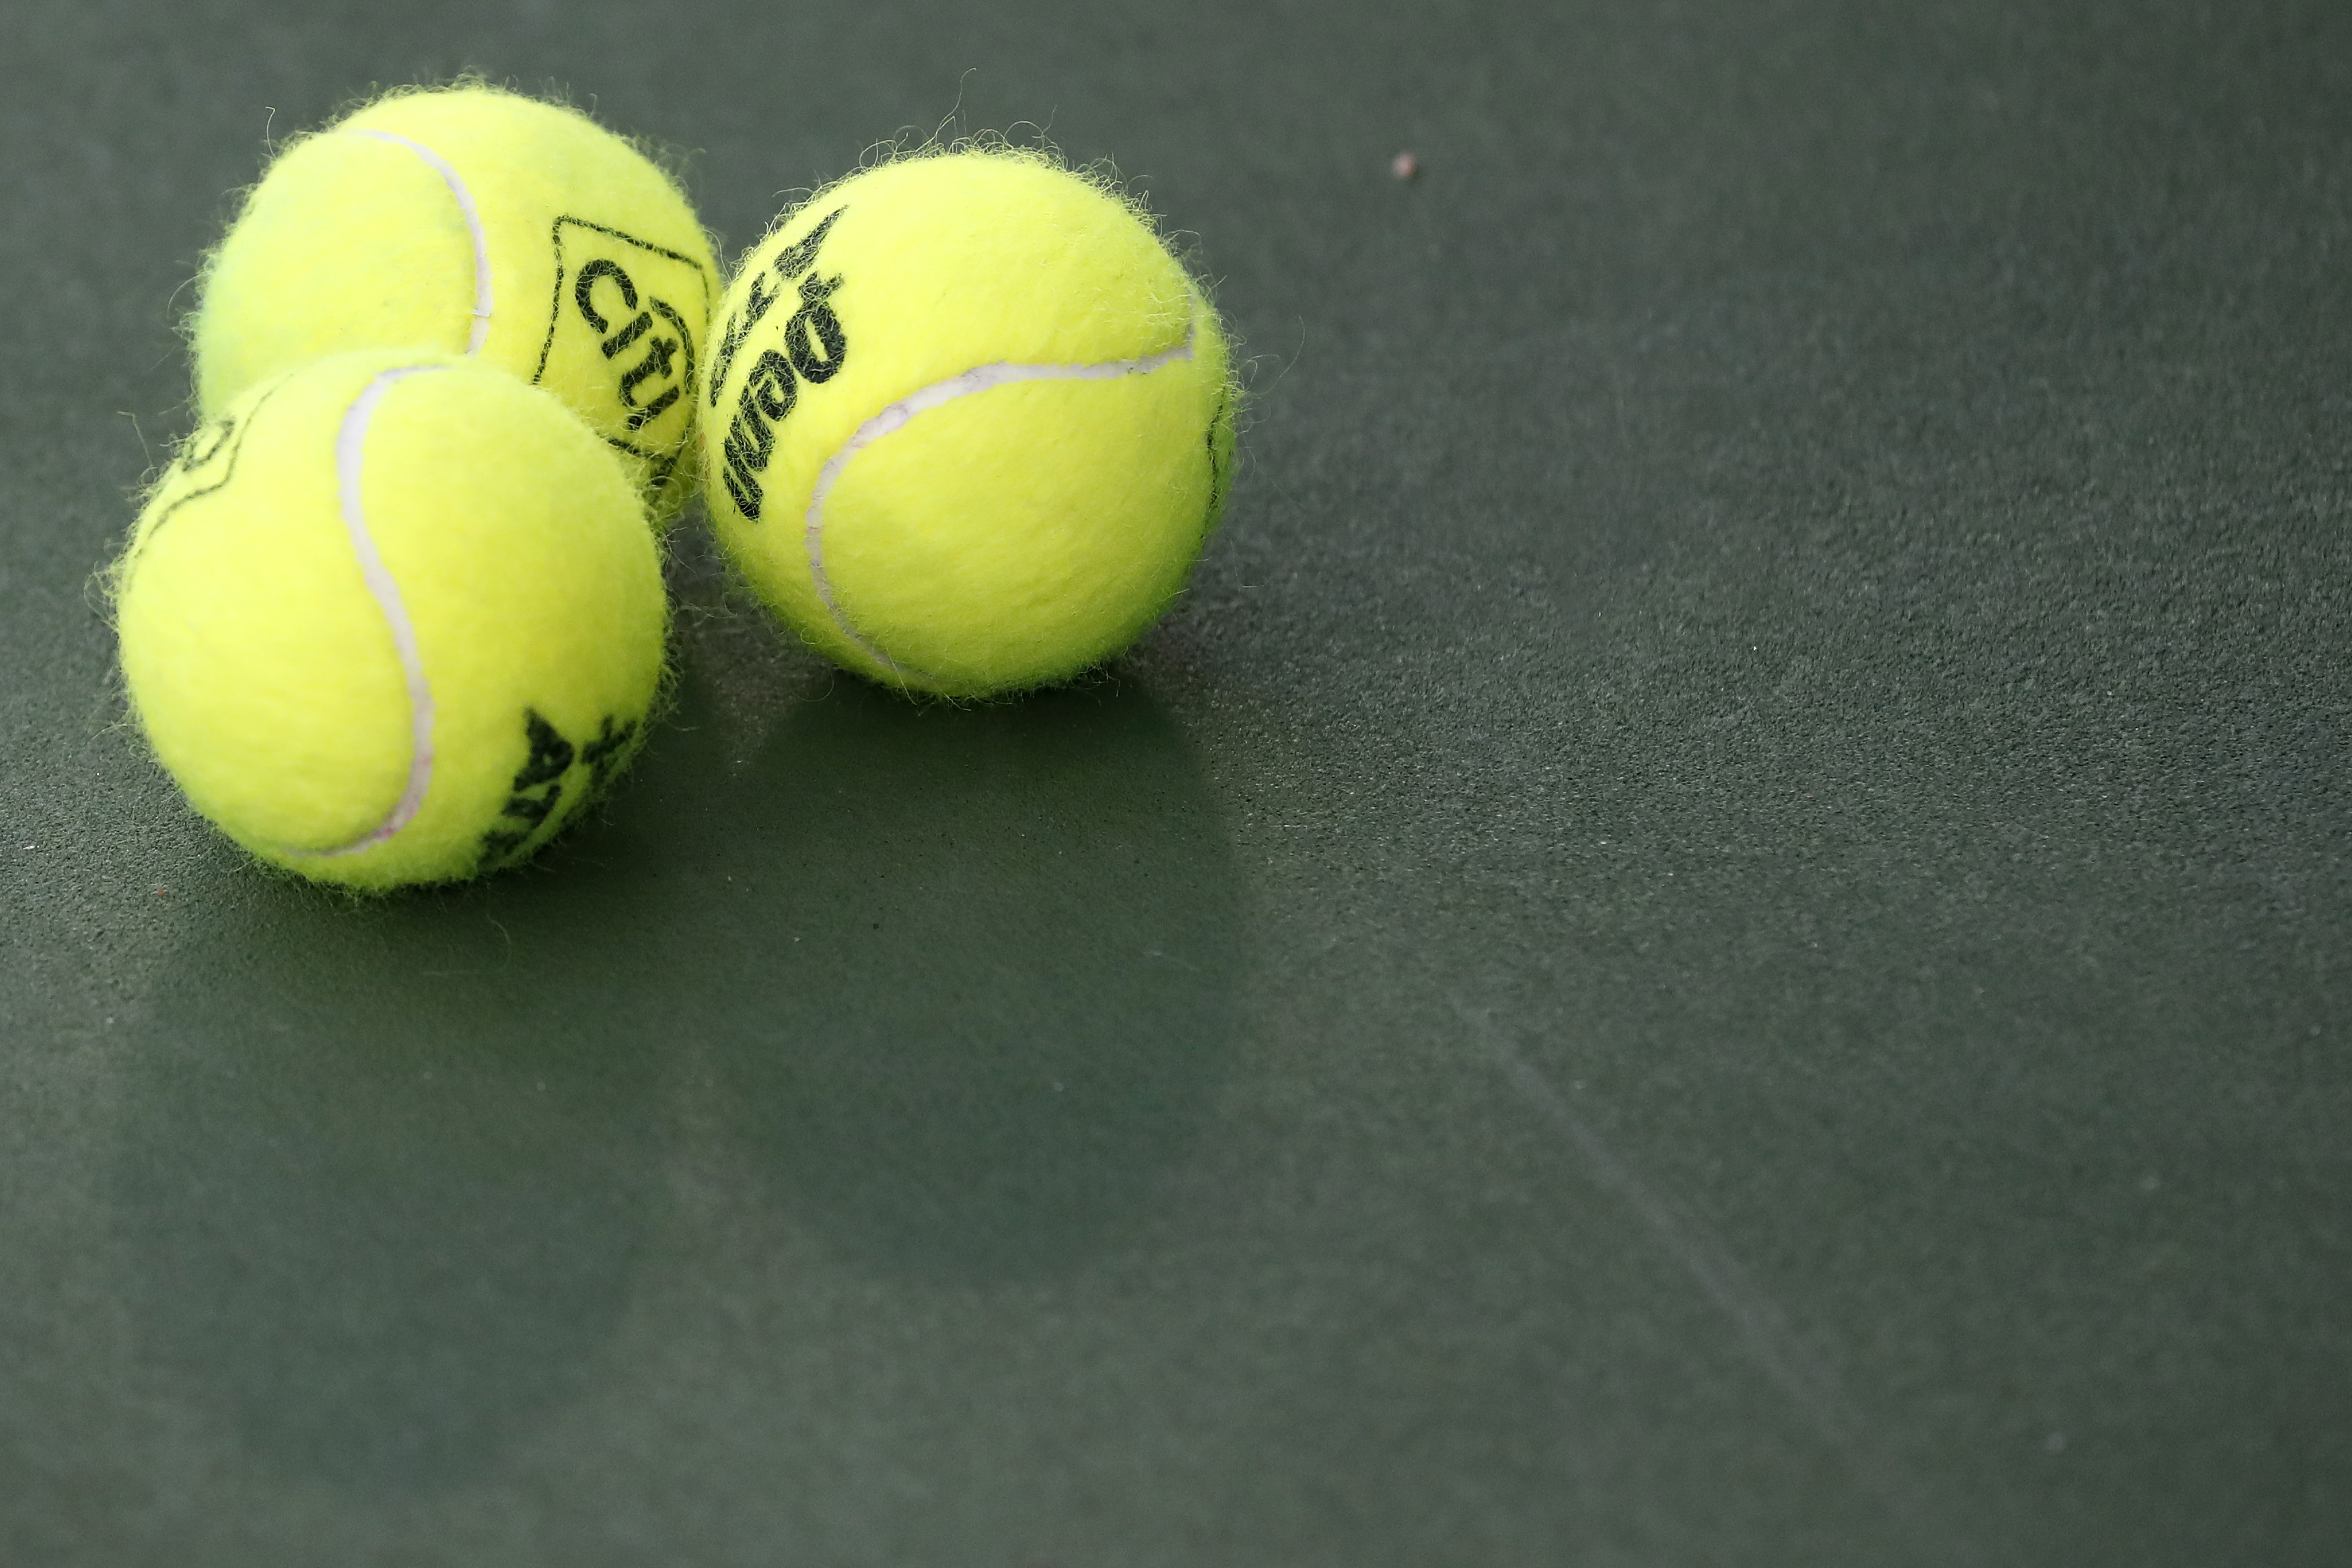 Tennis: Citi Open-Duckworth v Smyczek